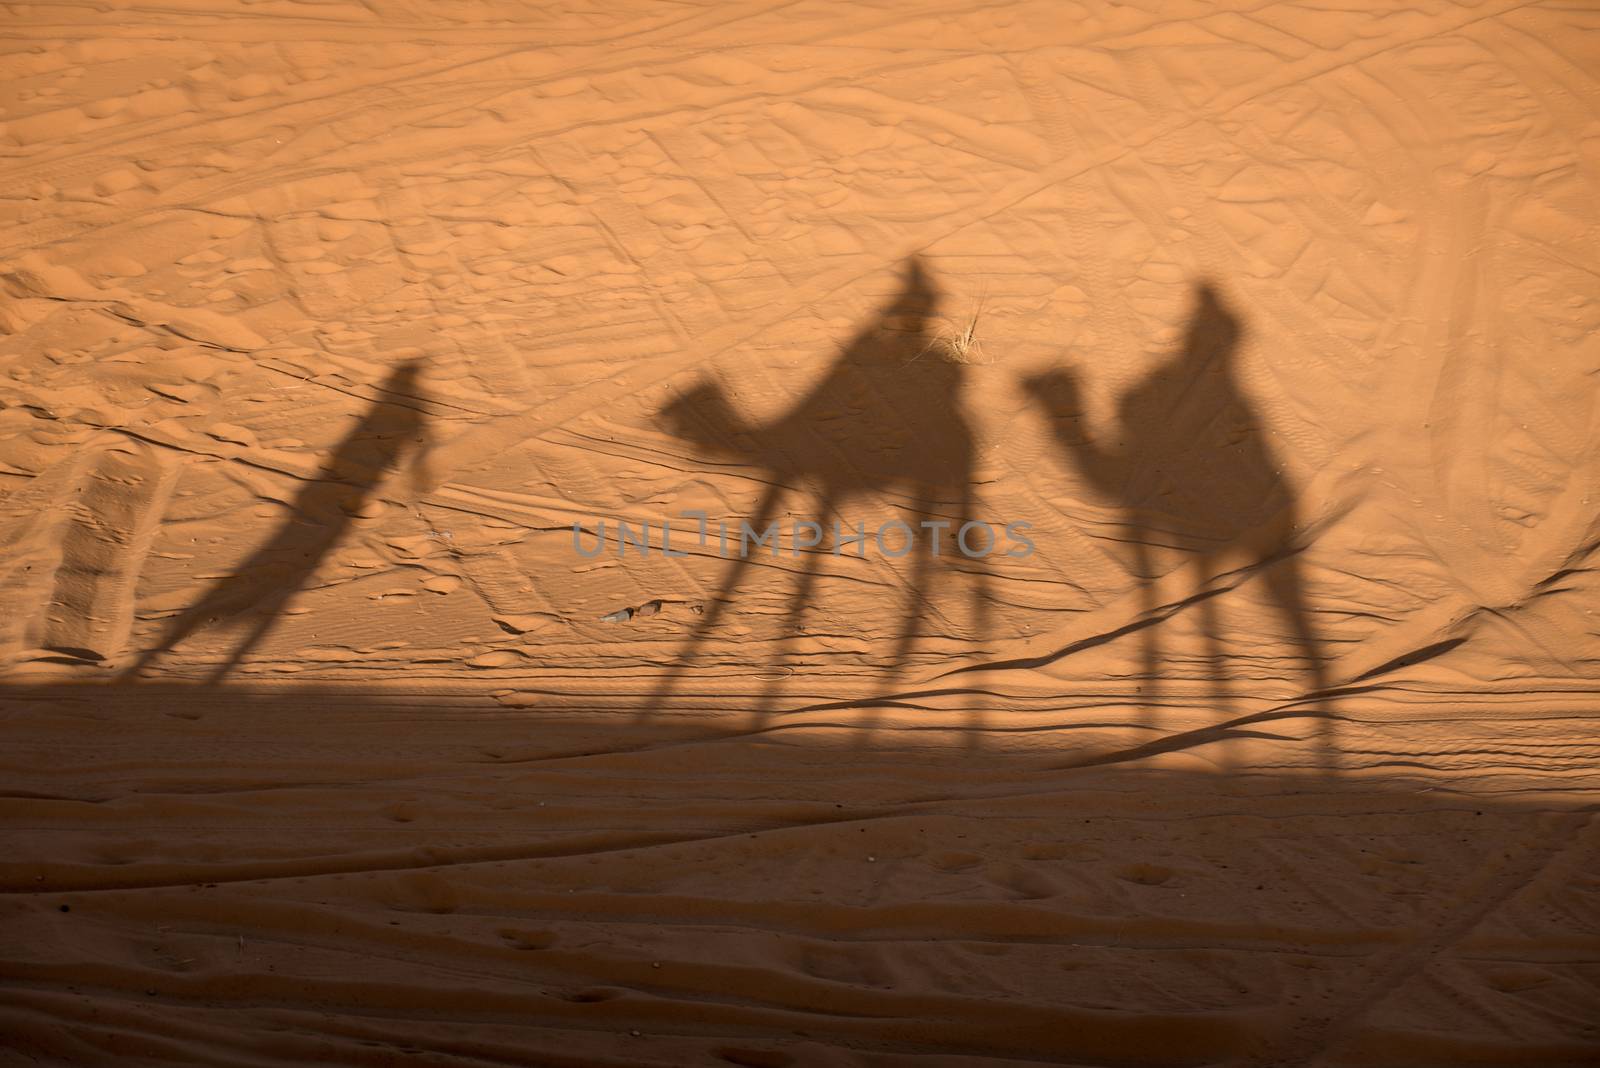 Camel shadows on Sahara Desert sand in Morocco. by johnnychaos